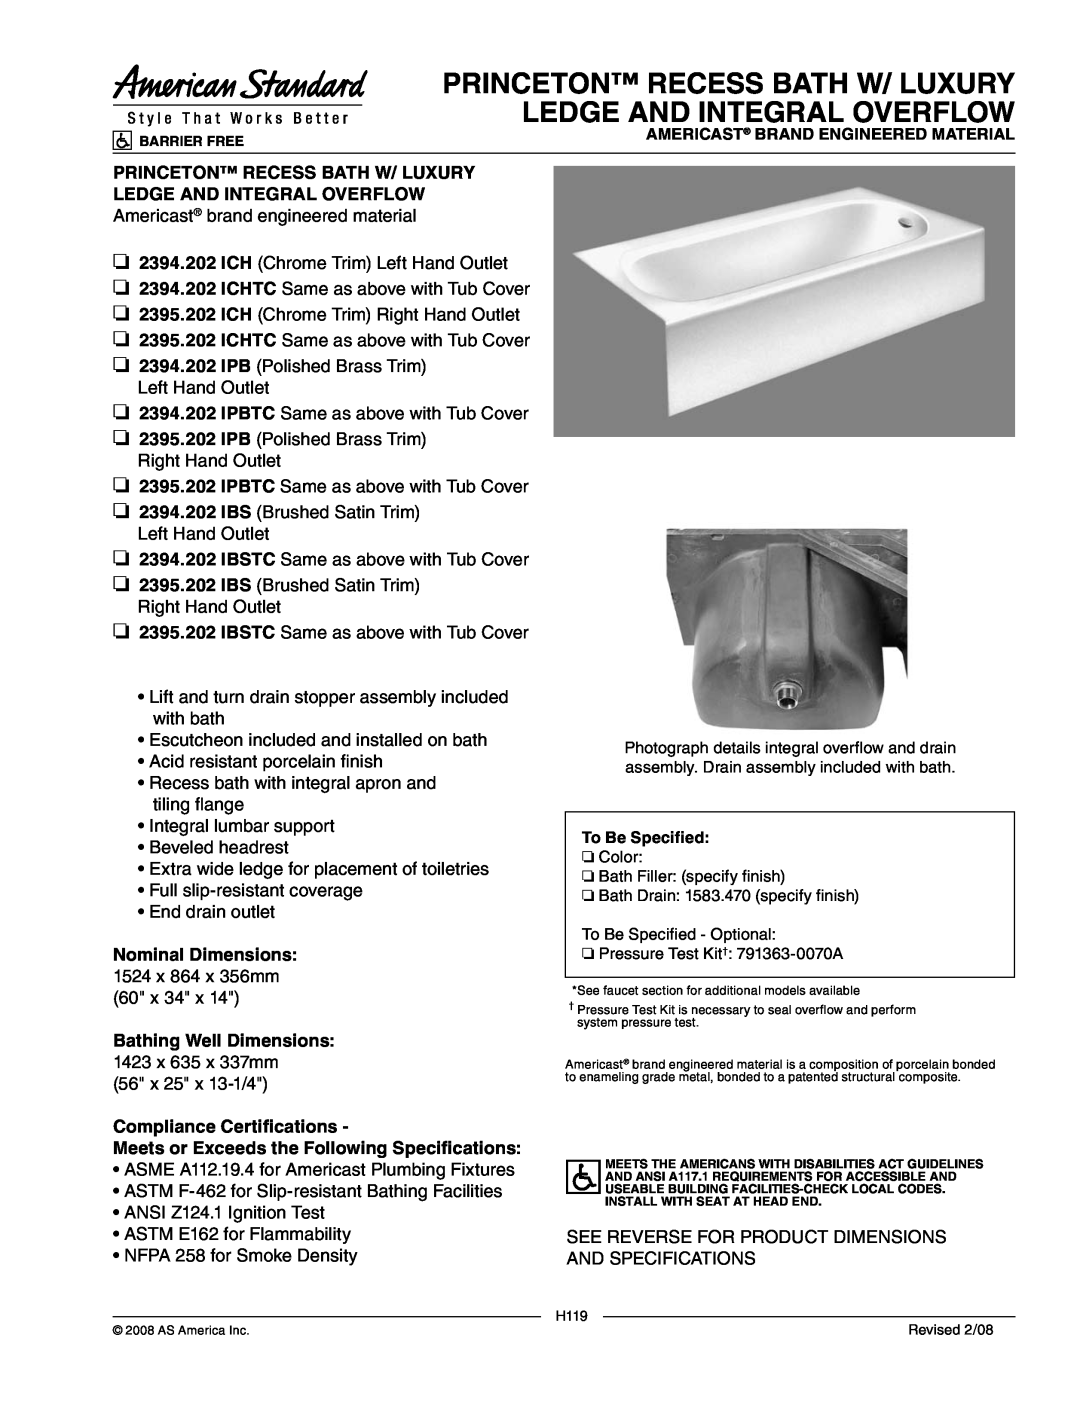 American Standard 2395.202 IBS, 2395.202 IPB dimensions Princeton Recess Bath W/ Luxury Ledge And Integral Overflow 